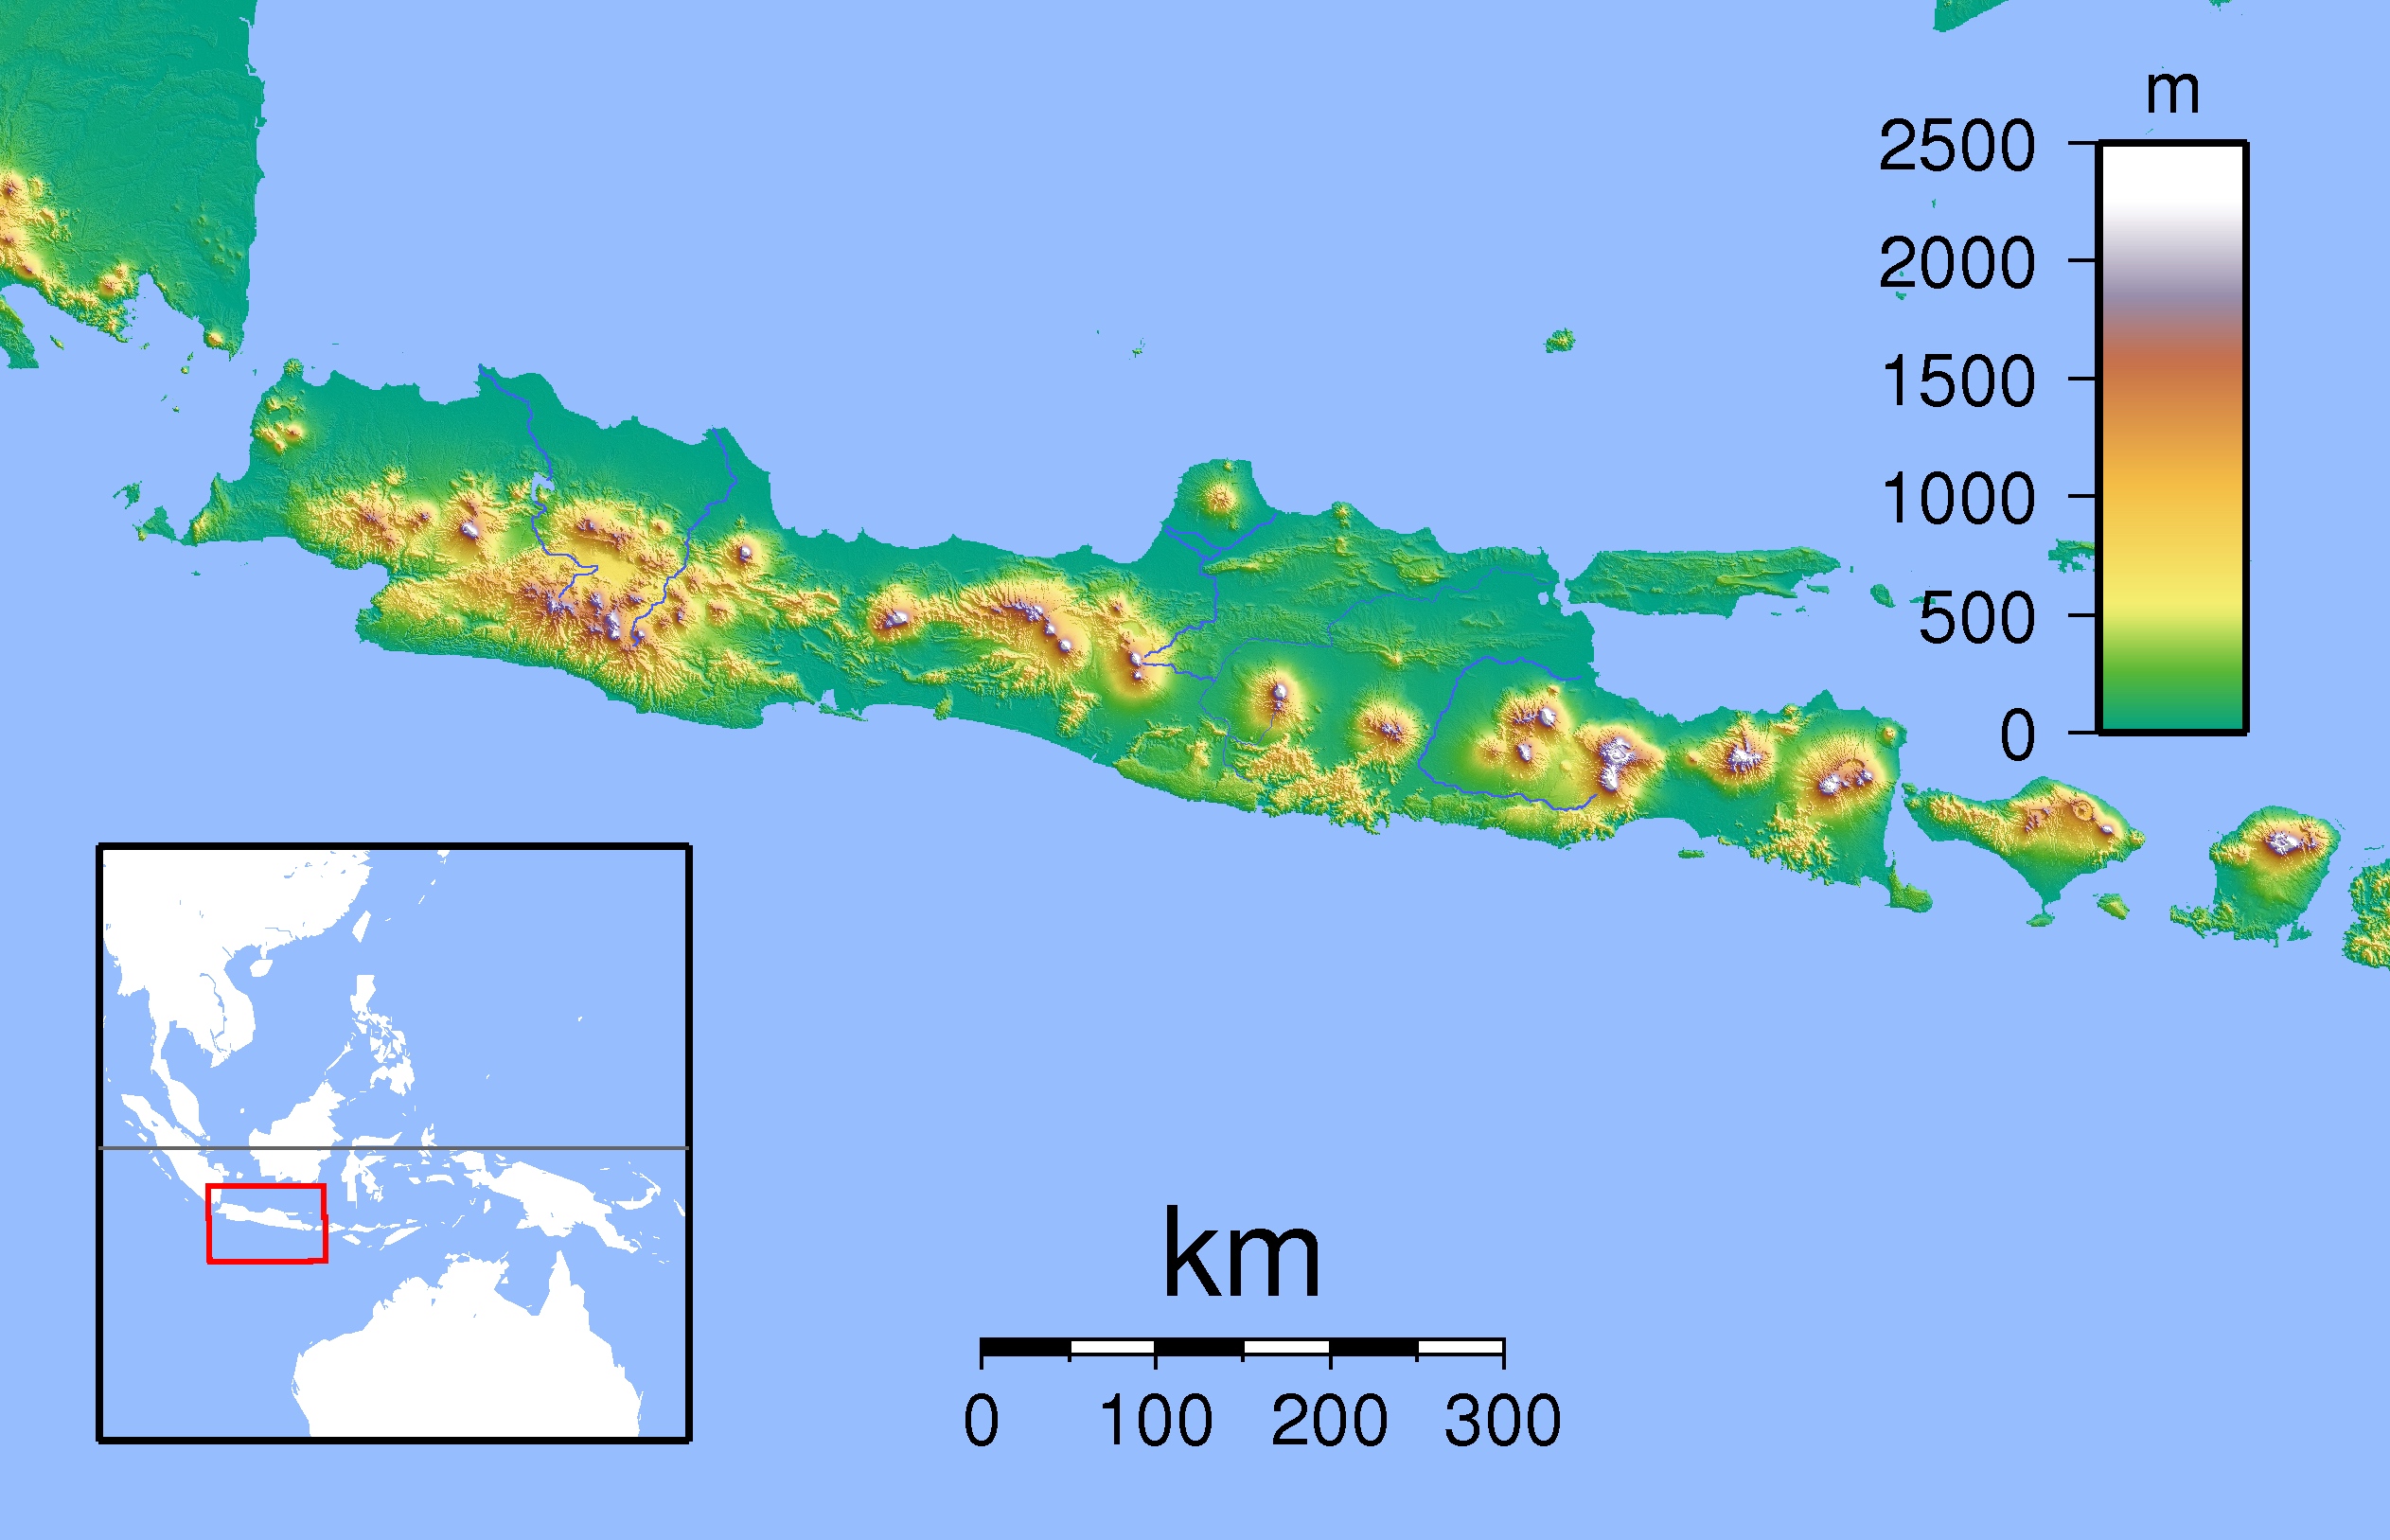 Indonesia Java  topographic  Map   PopulationData net